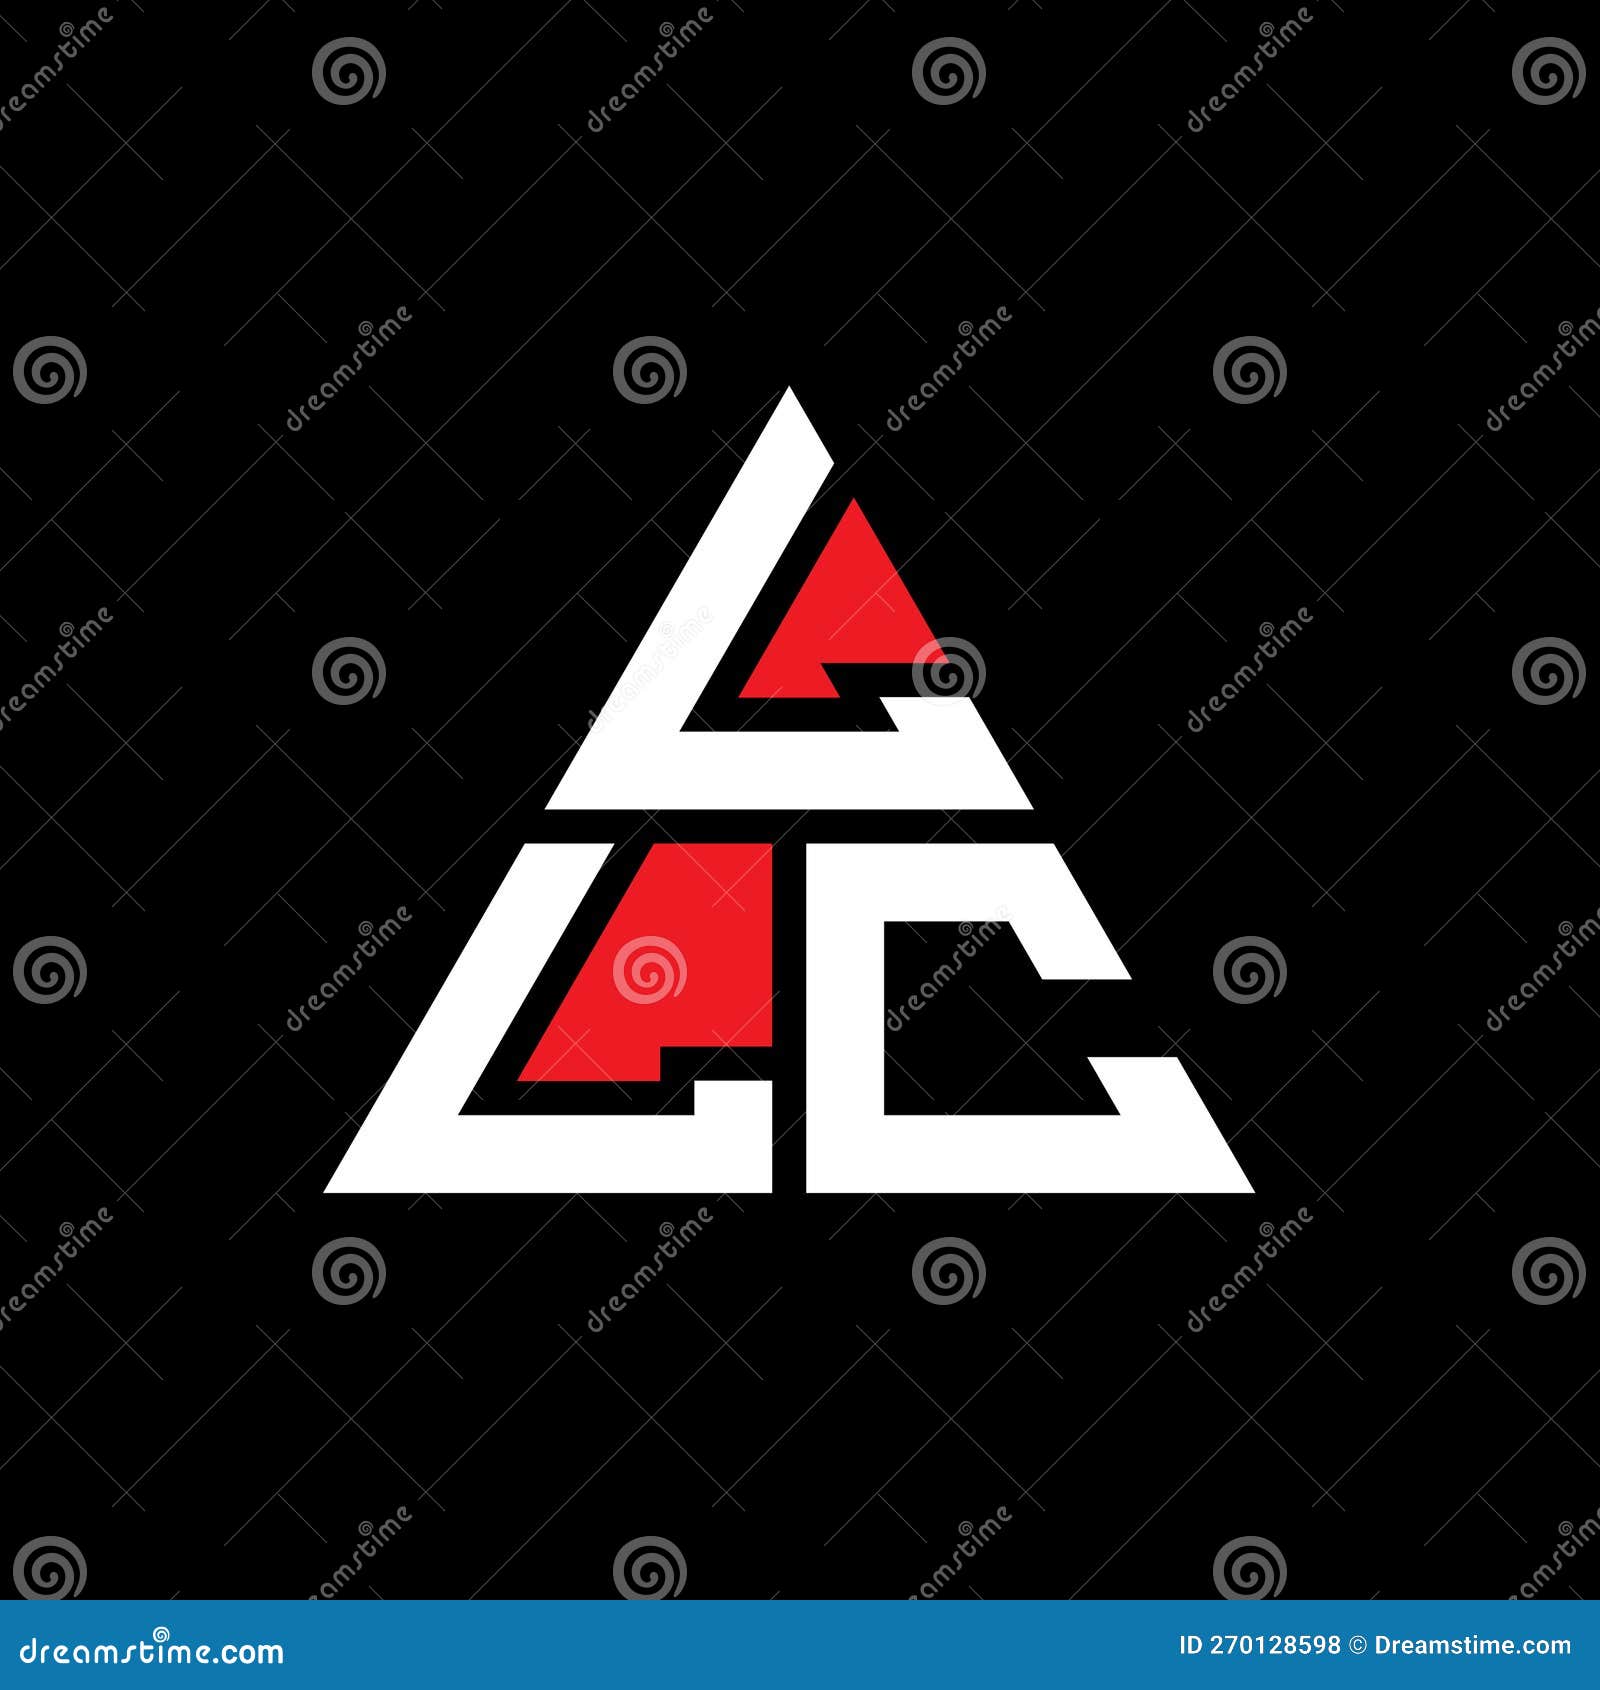 Llc Logo Design Stock Illustrations – 47 Llc Logo Design Stock